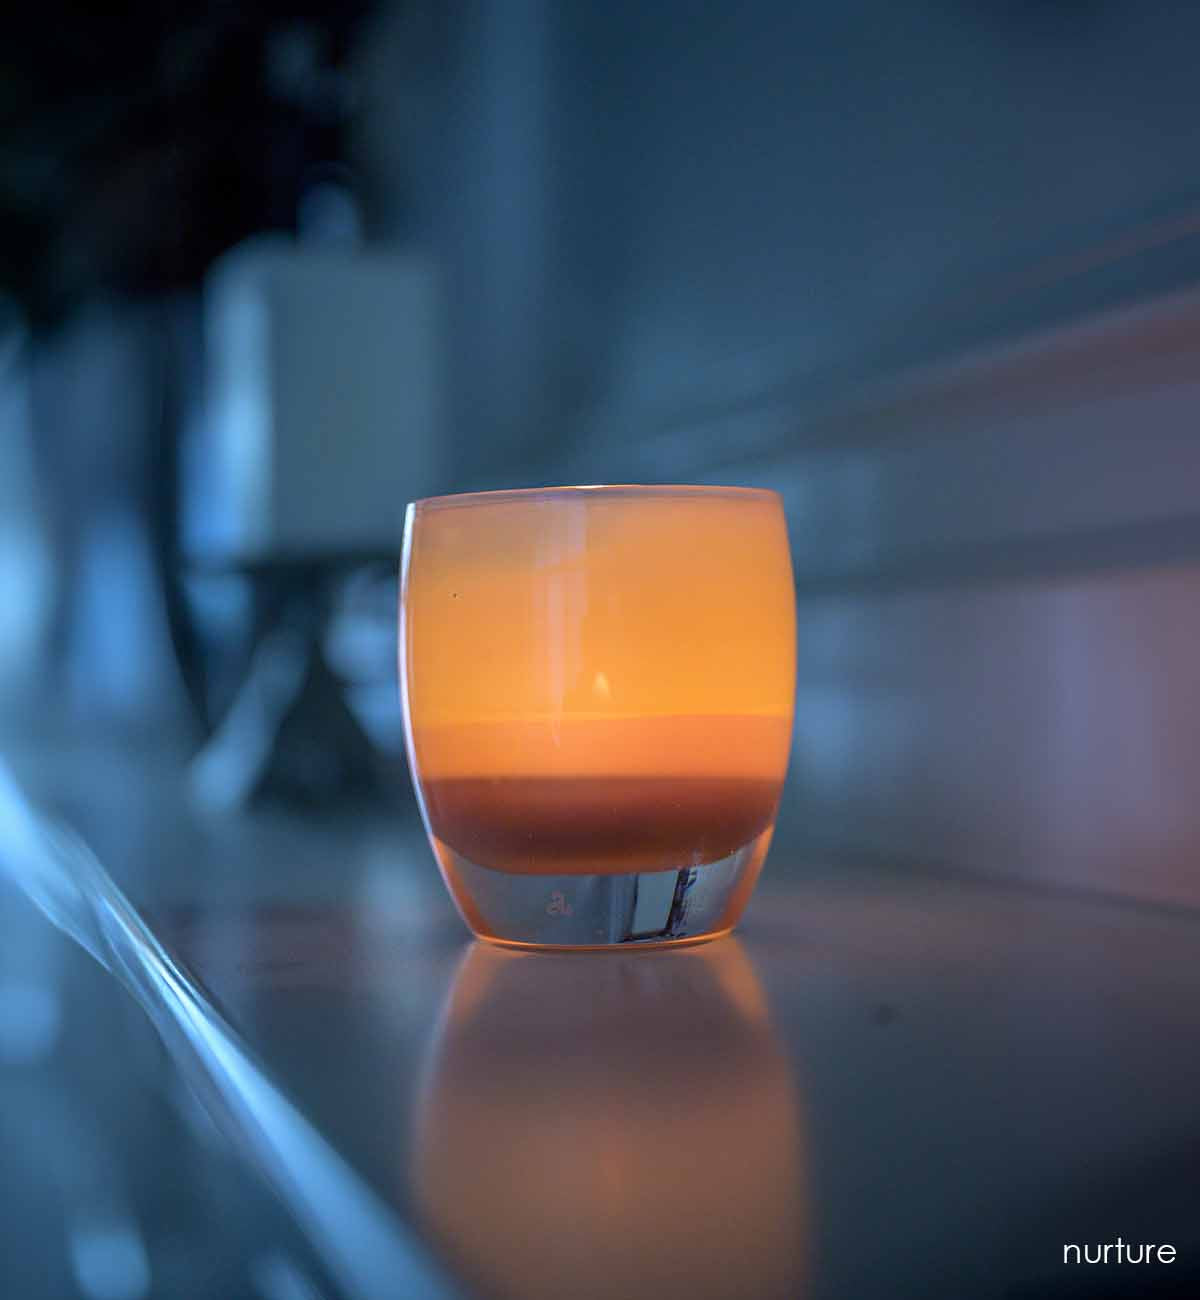 nurture, peachy glowing hand-blown glass votive candle holder, lit on a mantel.